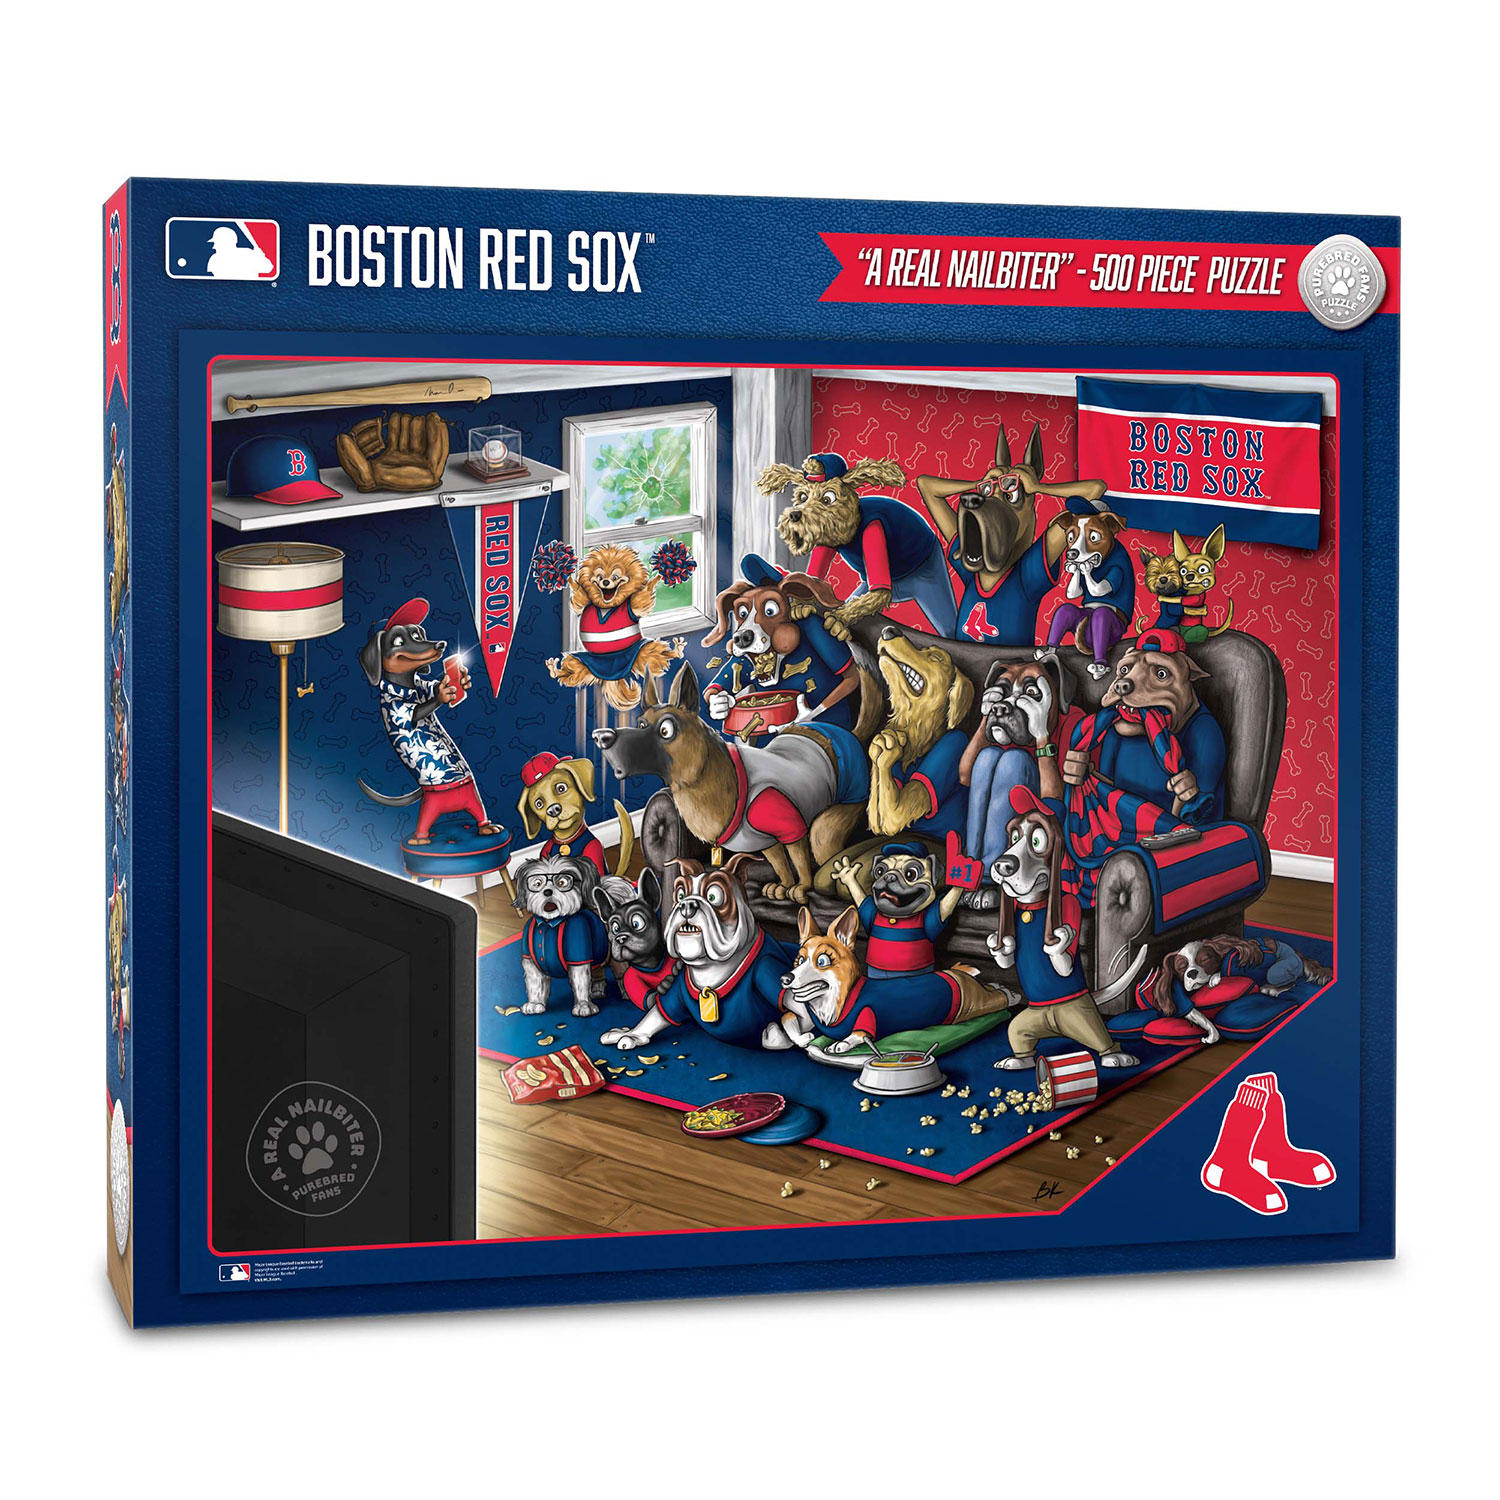 MLB Purebred Fans 500pc Puzzle - 'A Real Nailbiter' - Boston Red Sox